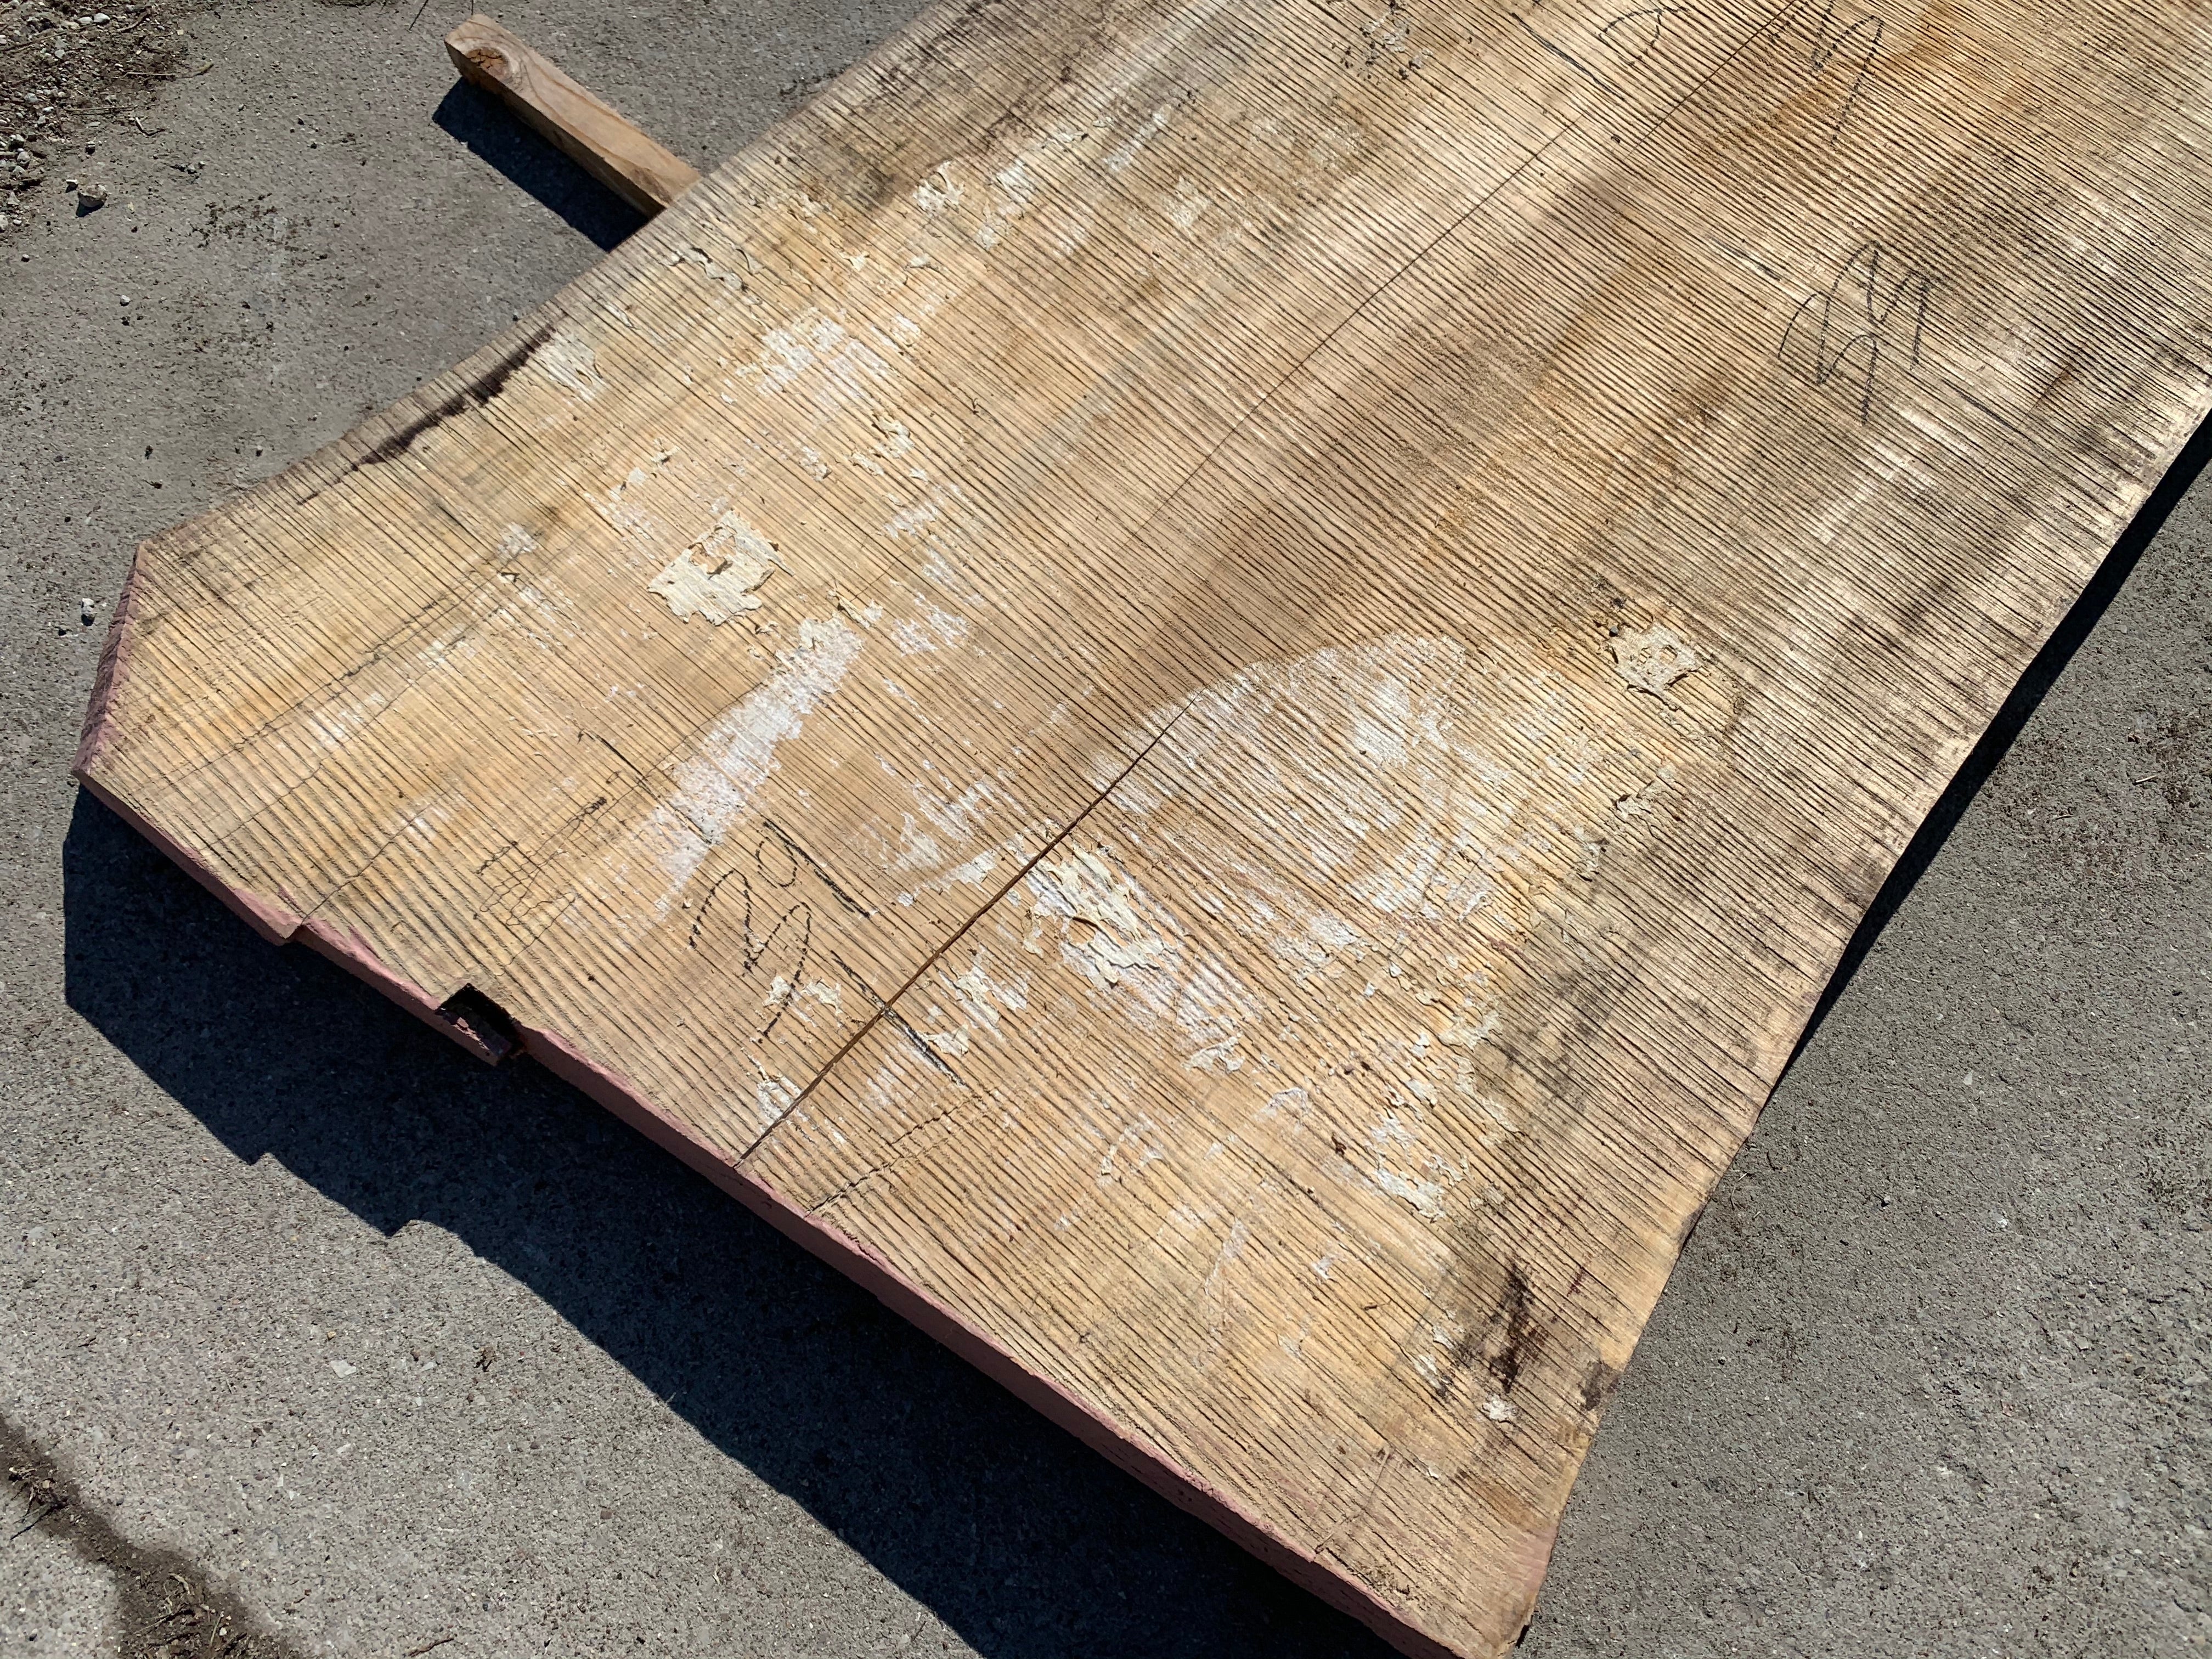 Spalted Soft Maple Slab #1233 Sawmill, mill, lumber, live edge slabs, mantles, floating shelves, wood, logs, log buyer